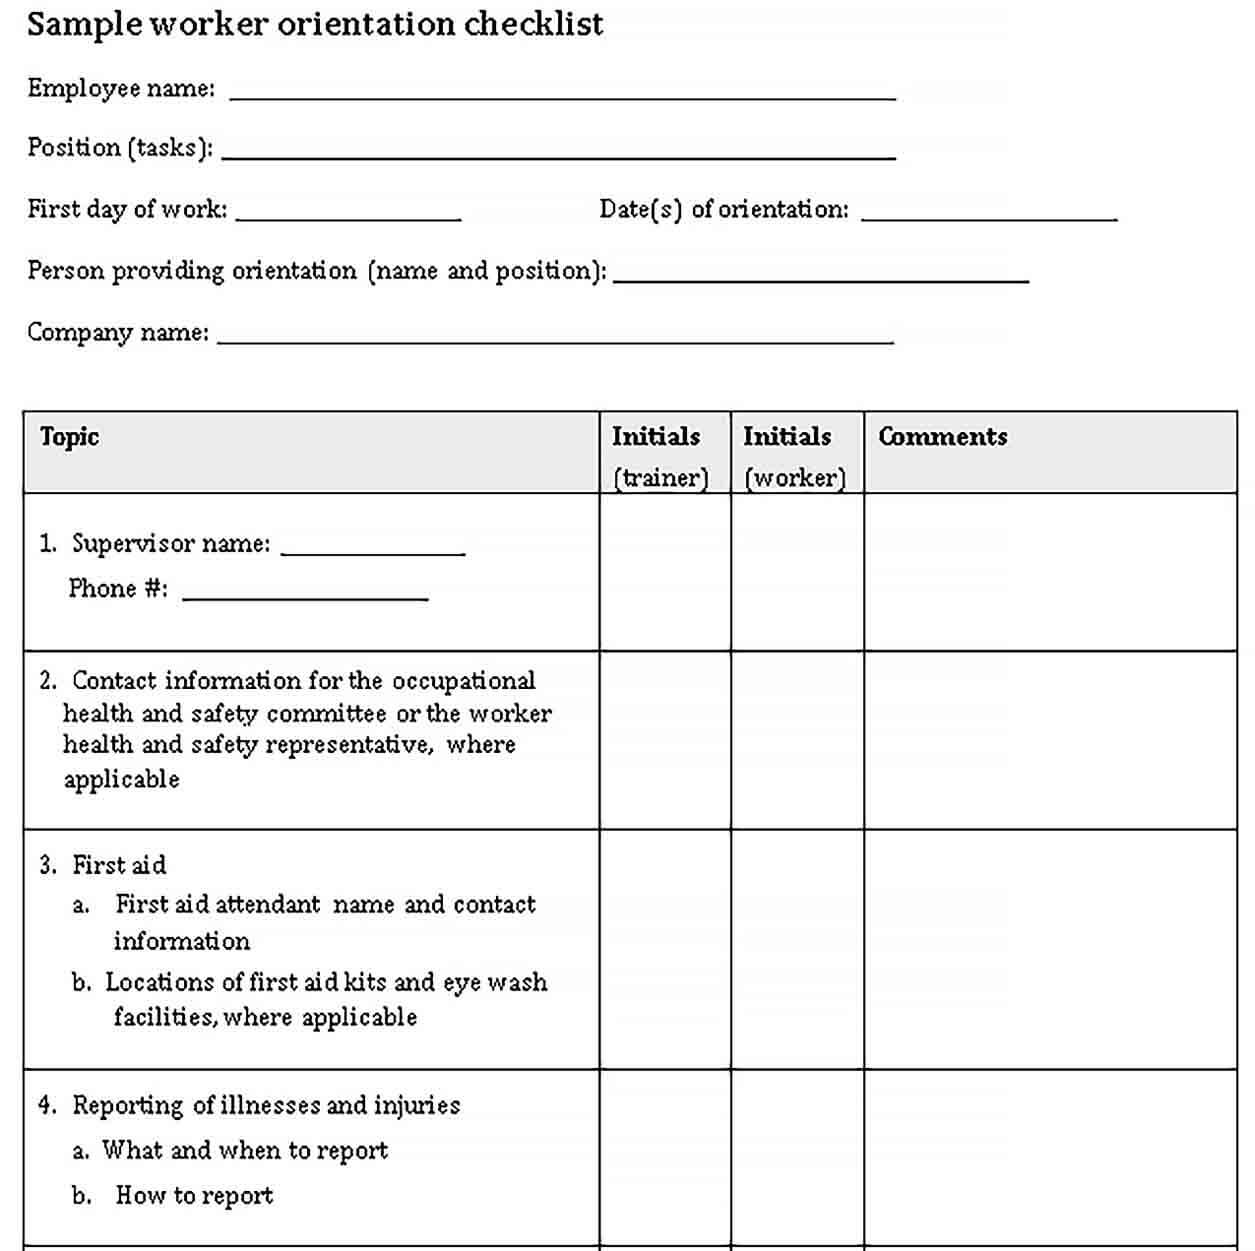 Sample Simple Orientation Checklist Template